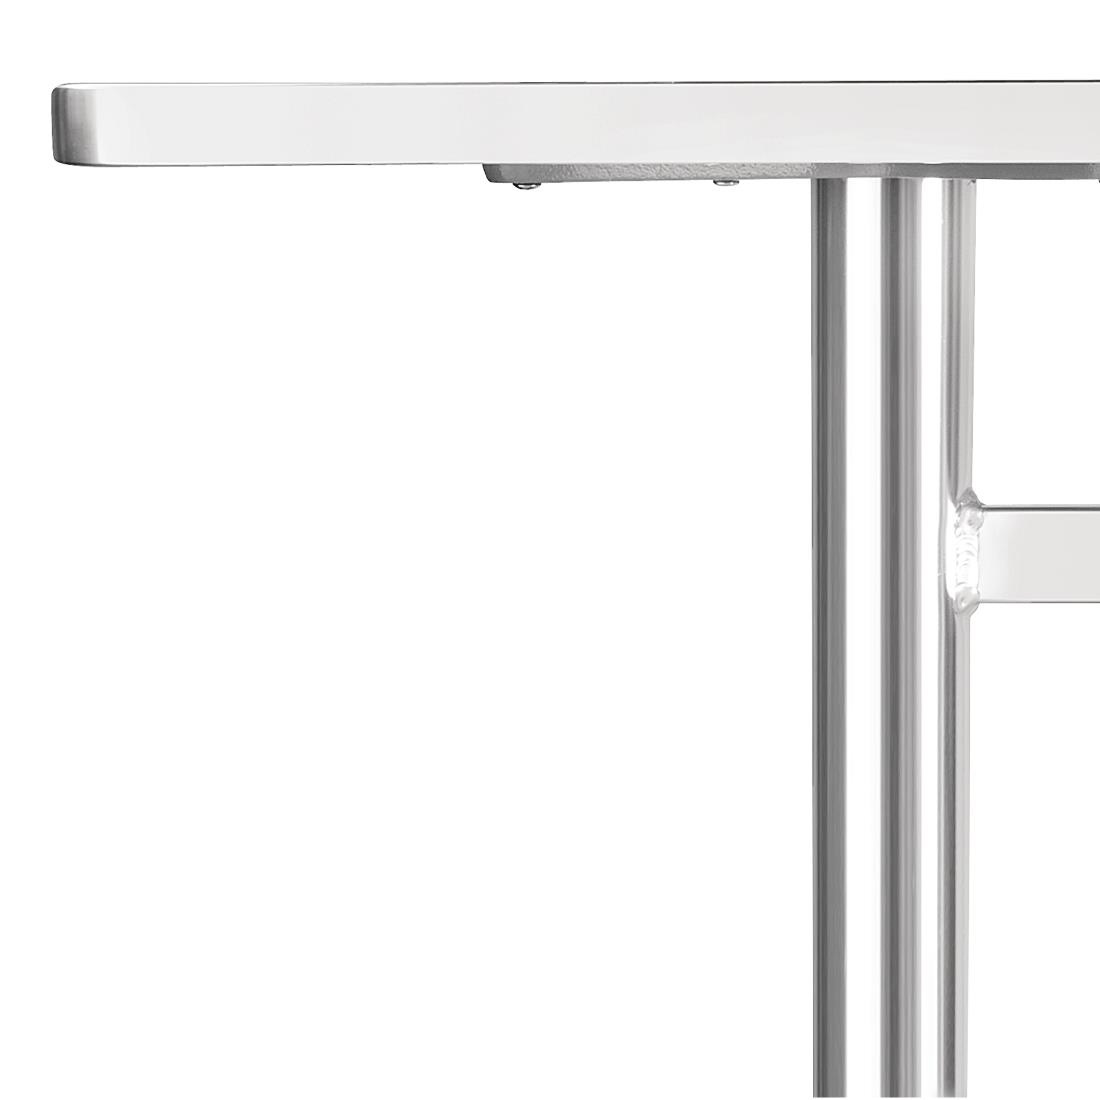 Table avec plateau en Inox - Cadre en Aluminium - 120x60(h)75cm